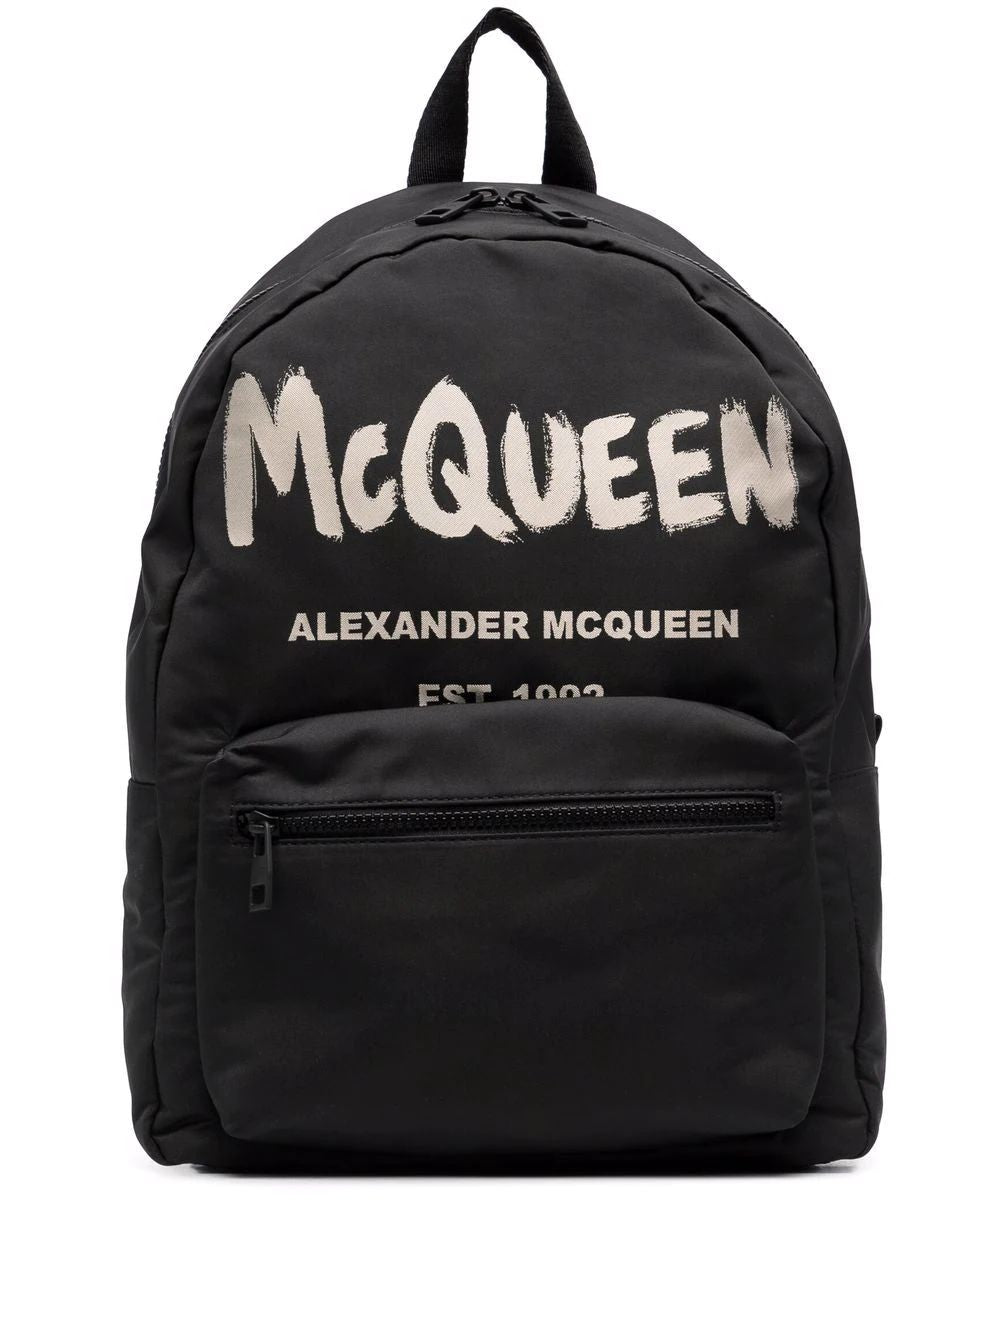 ALEXANDER MCQUEEN Graffiti XL Backpack for Men - Black